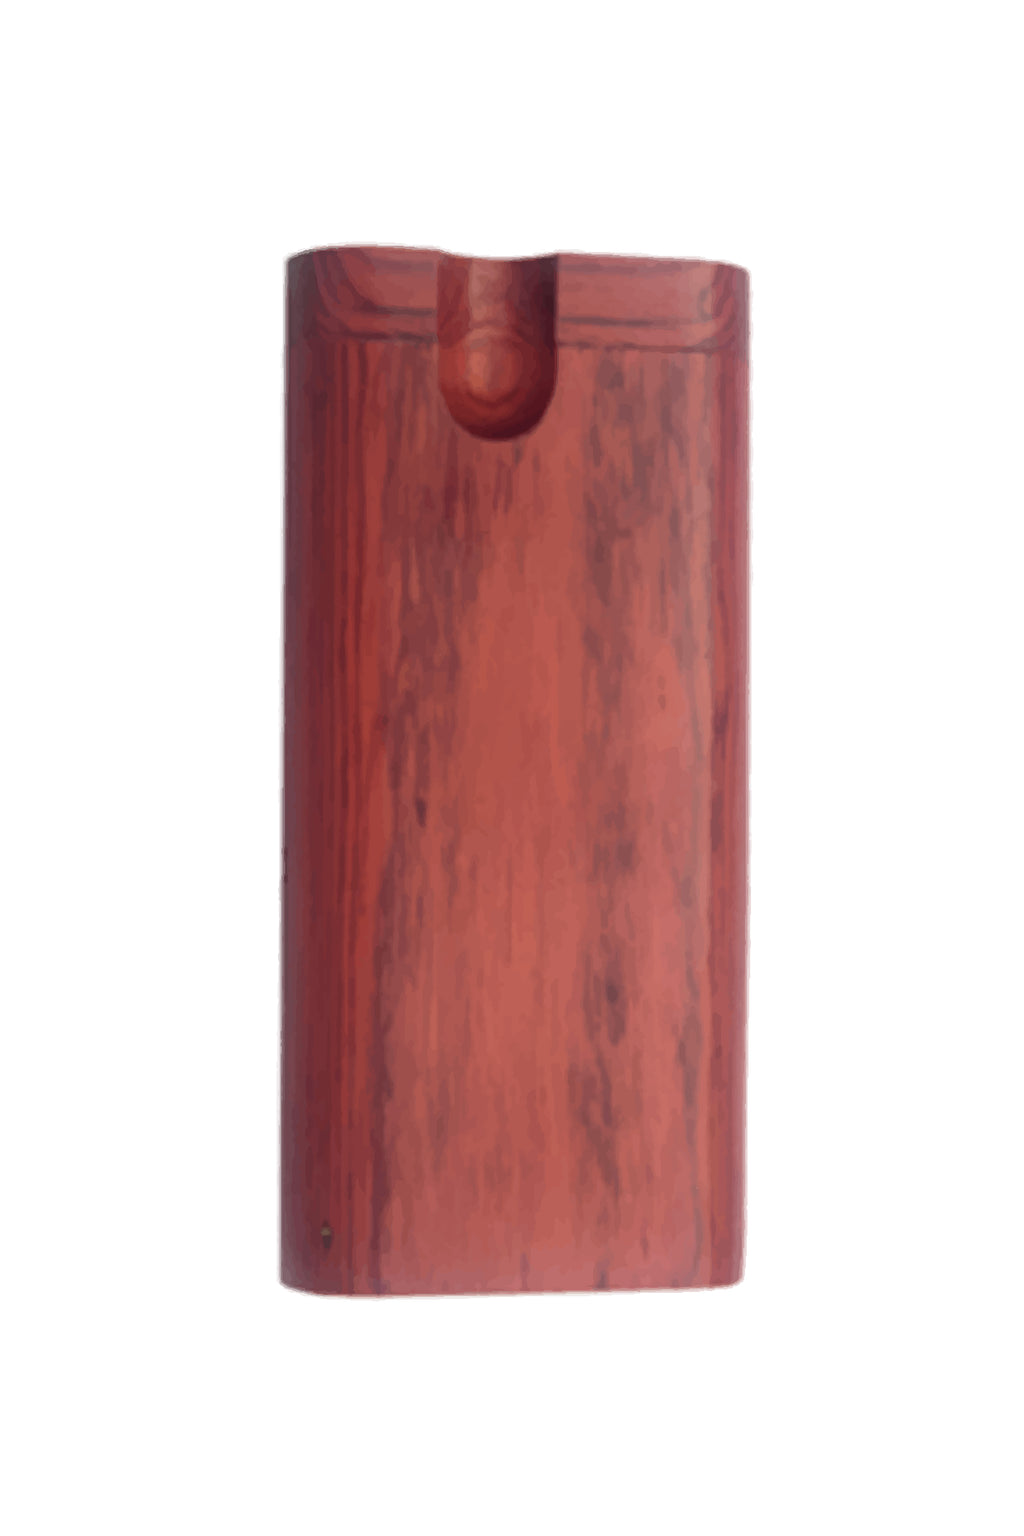 Wooden Dugout RED SM (No Grip)